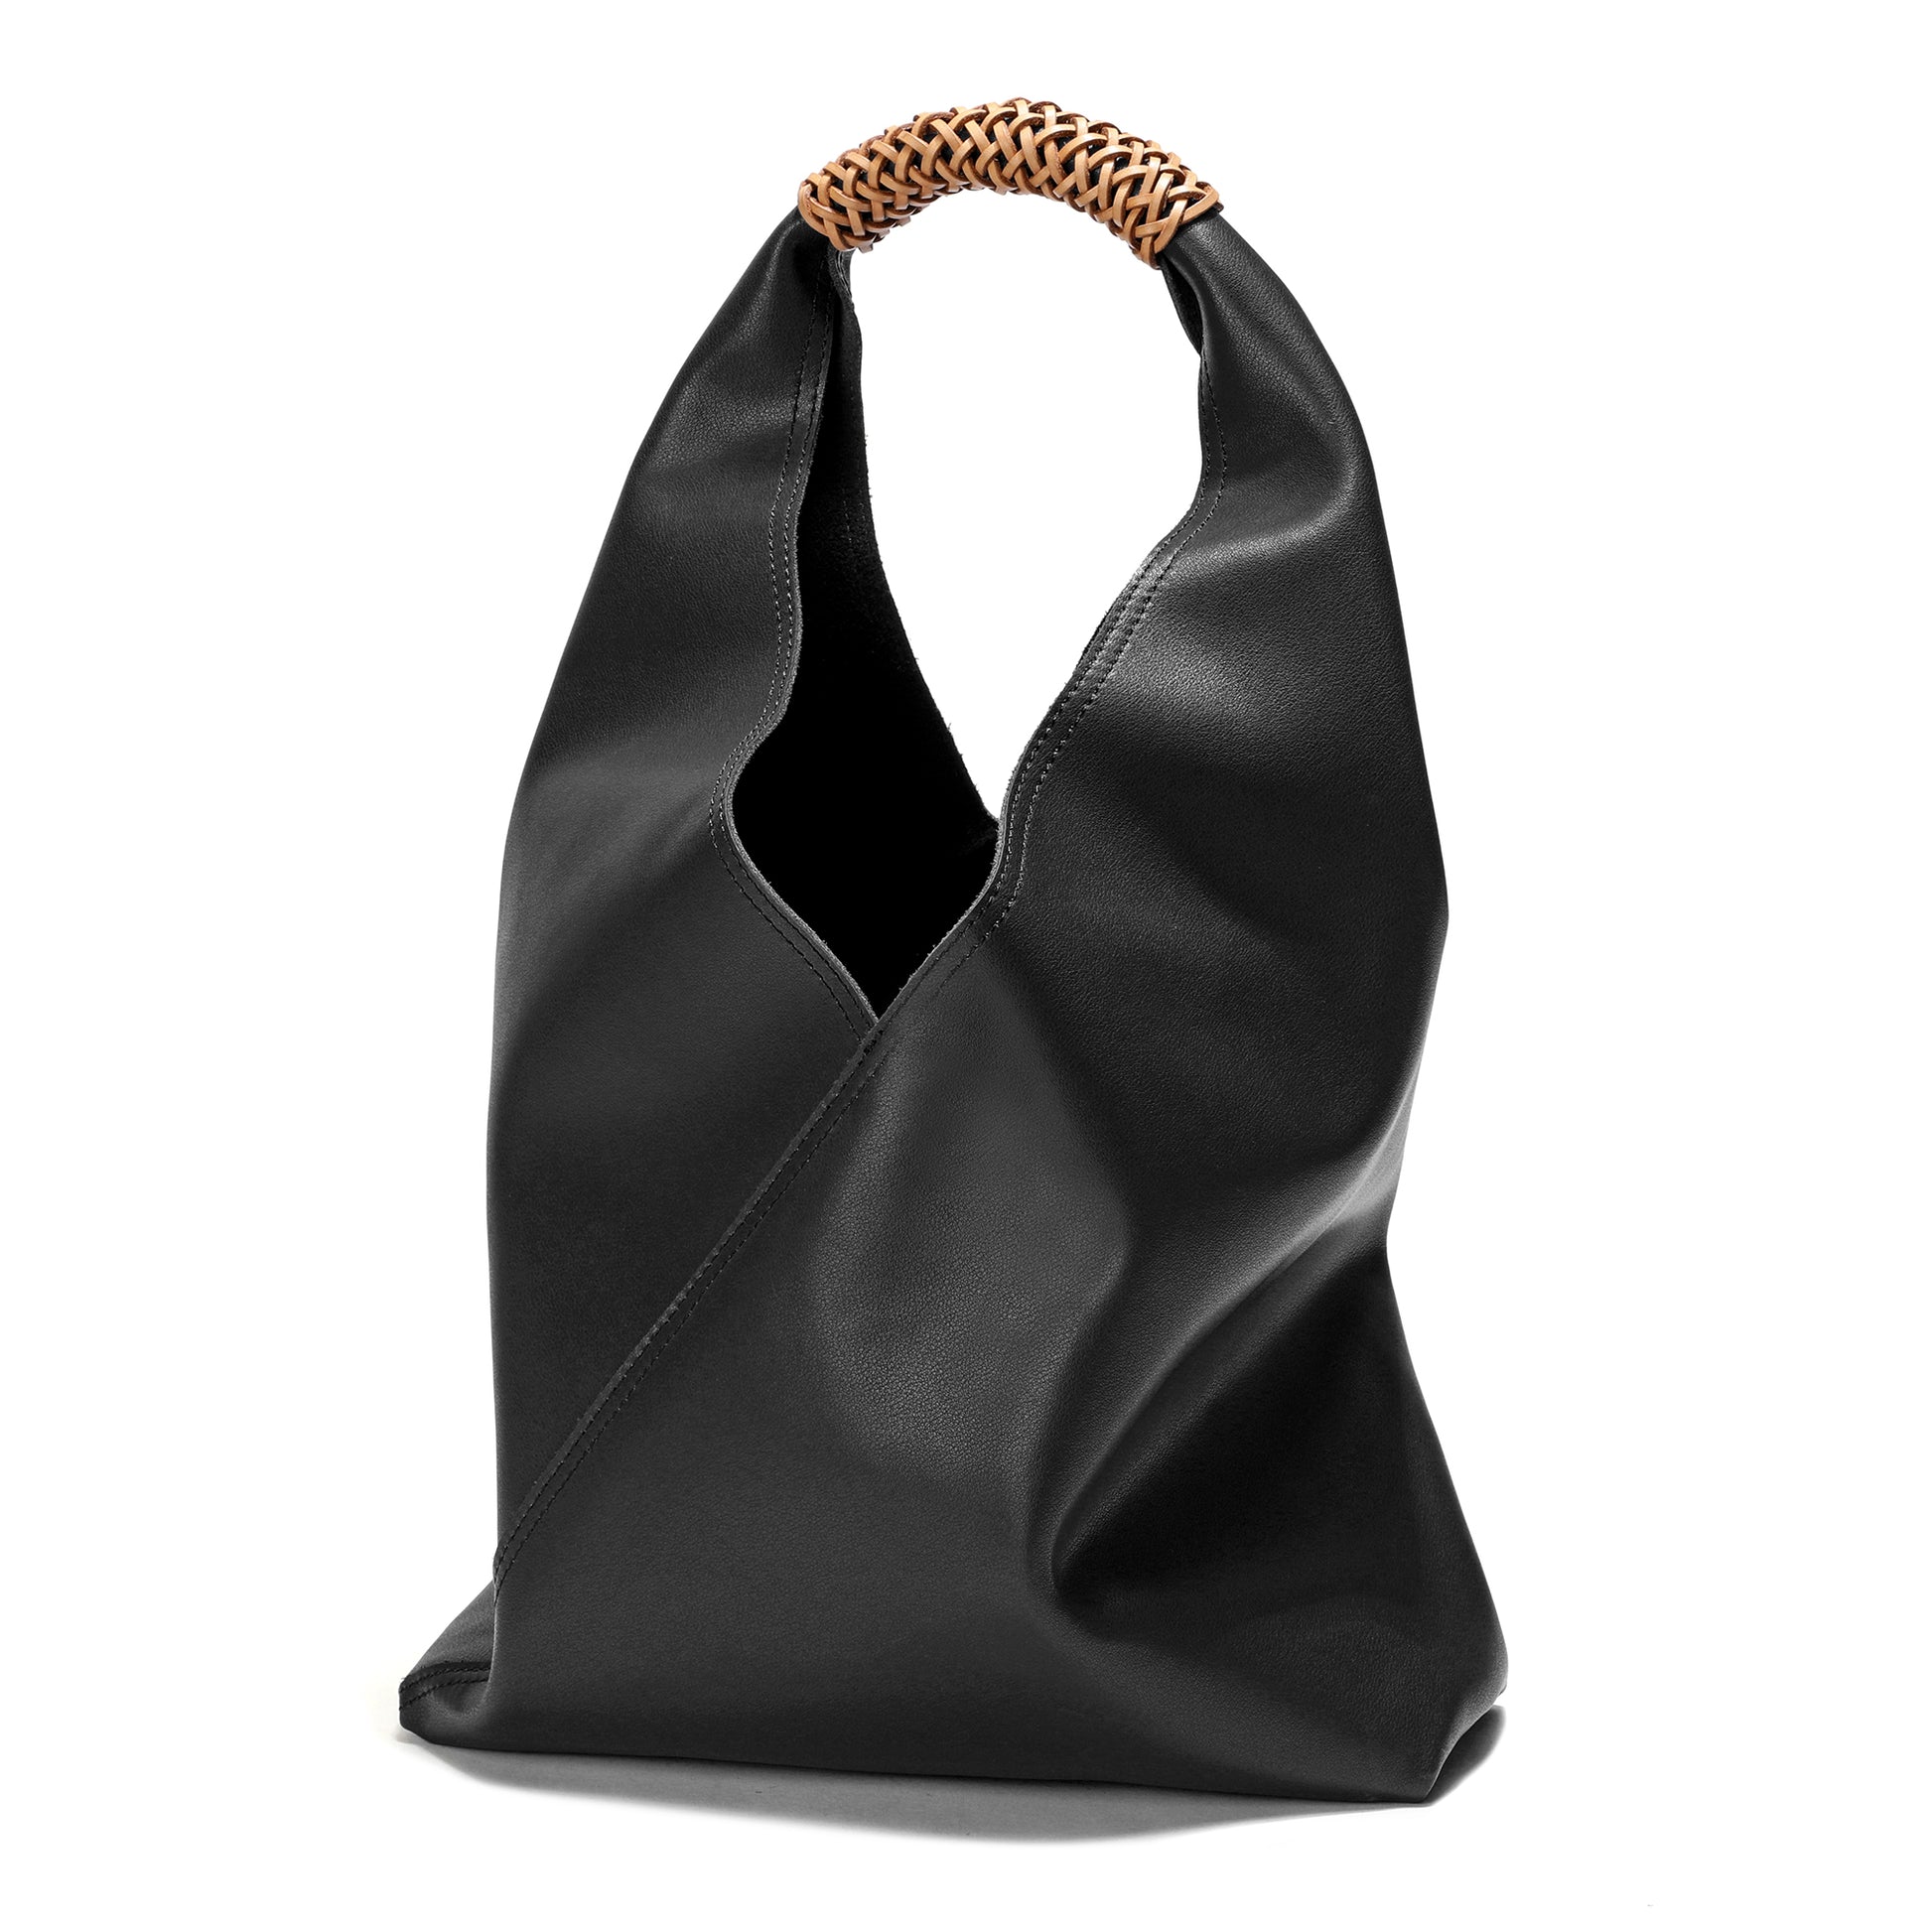 Tiffany & Fred Paris Vintage Smooth Black Leather Bag